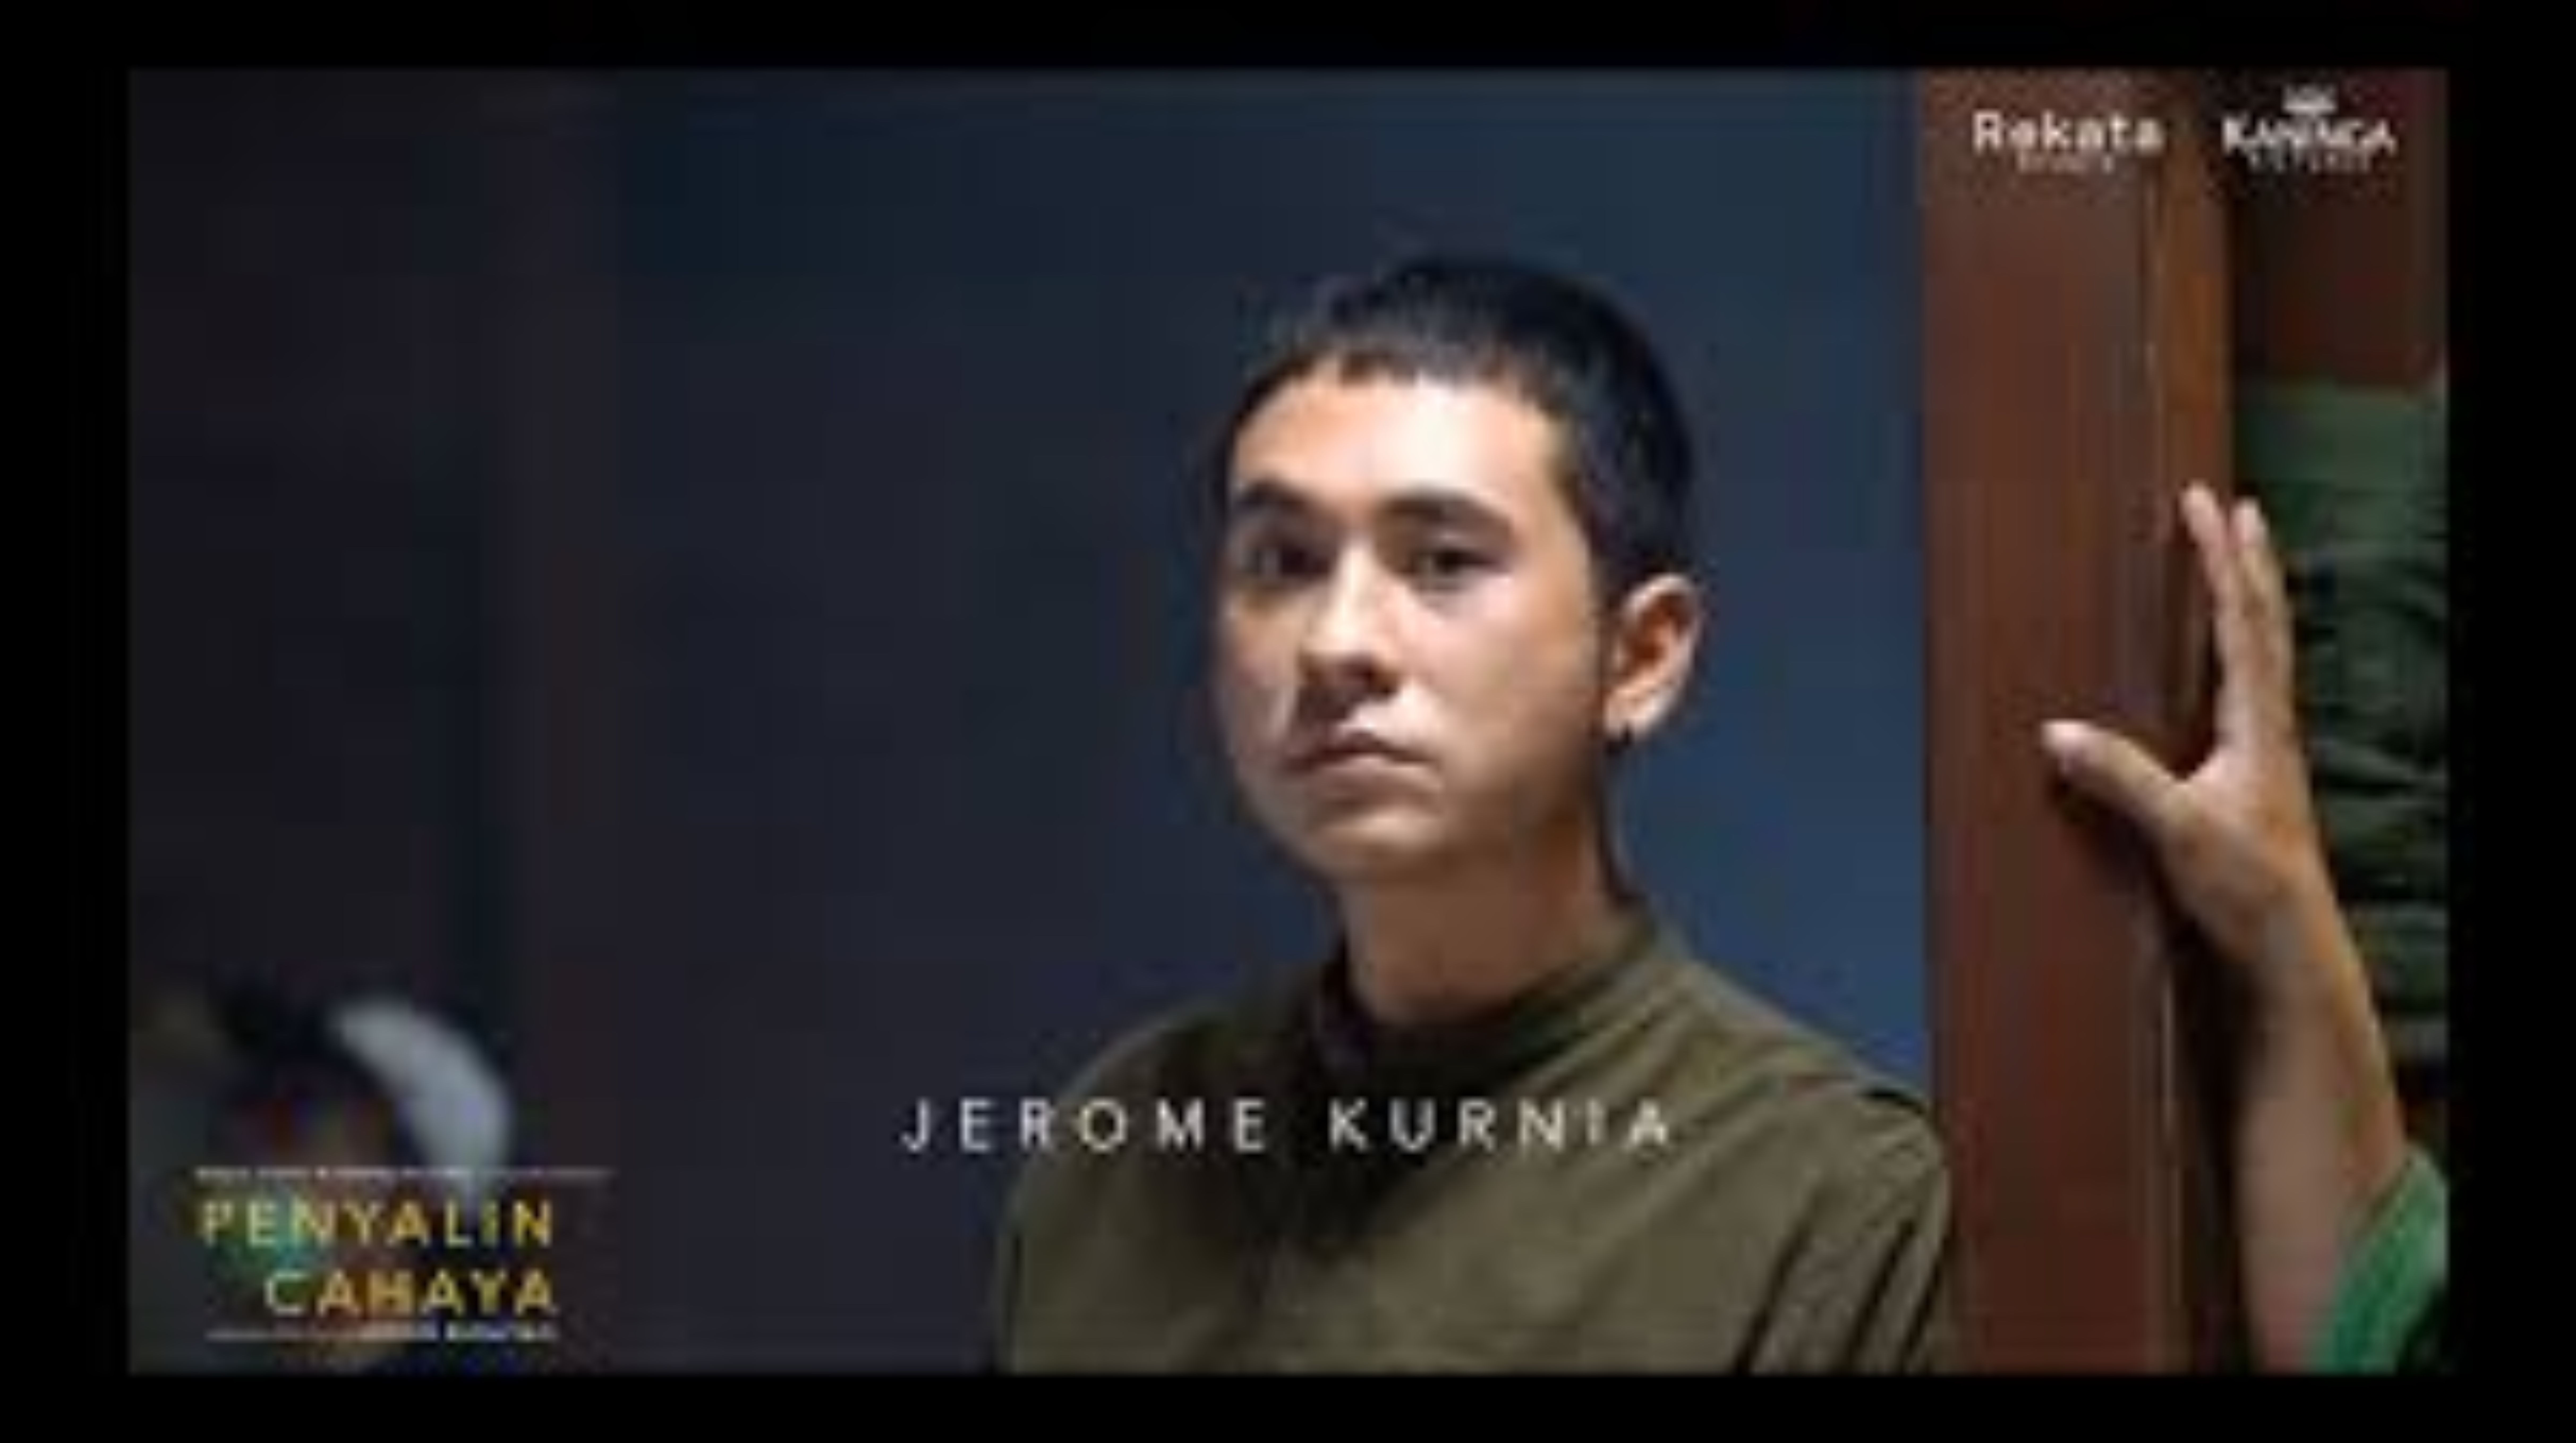 Jerome Kurnia